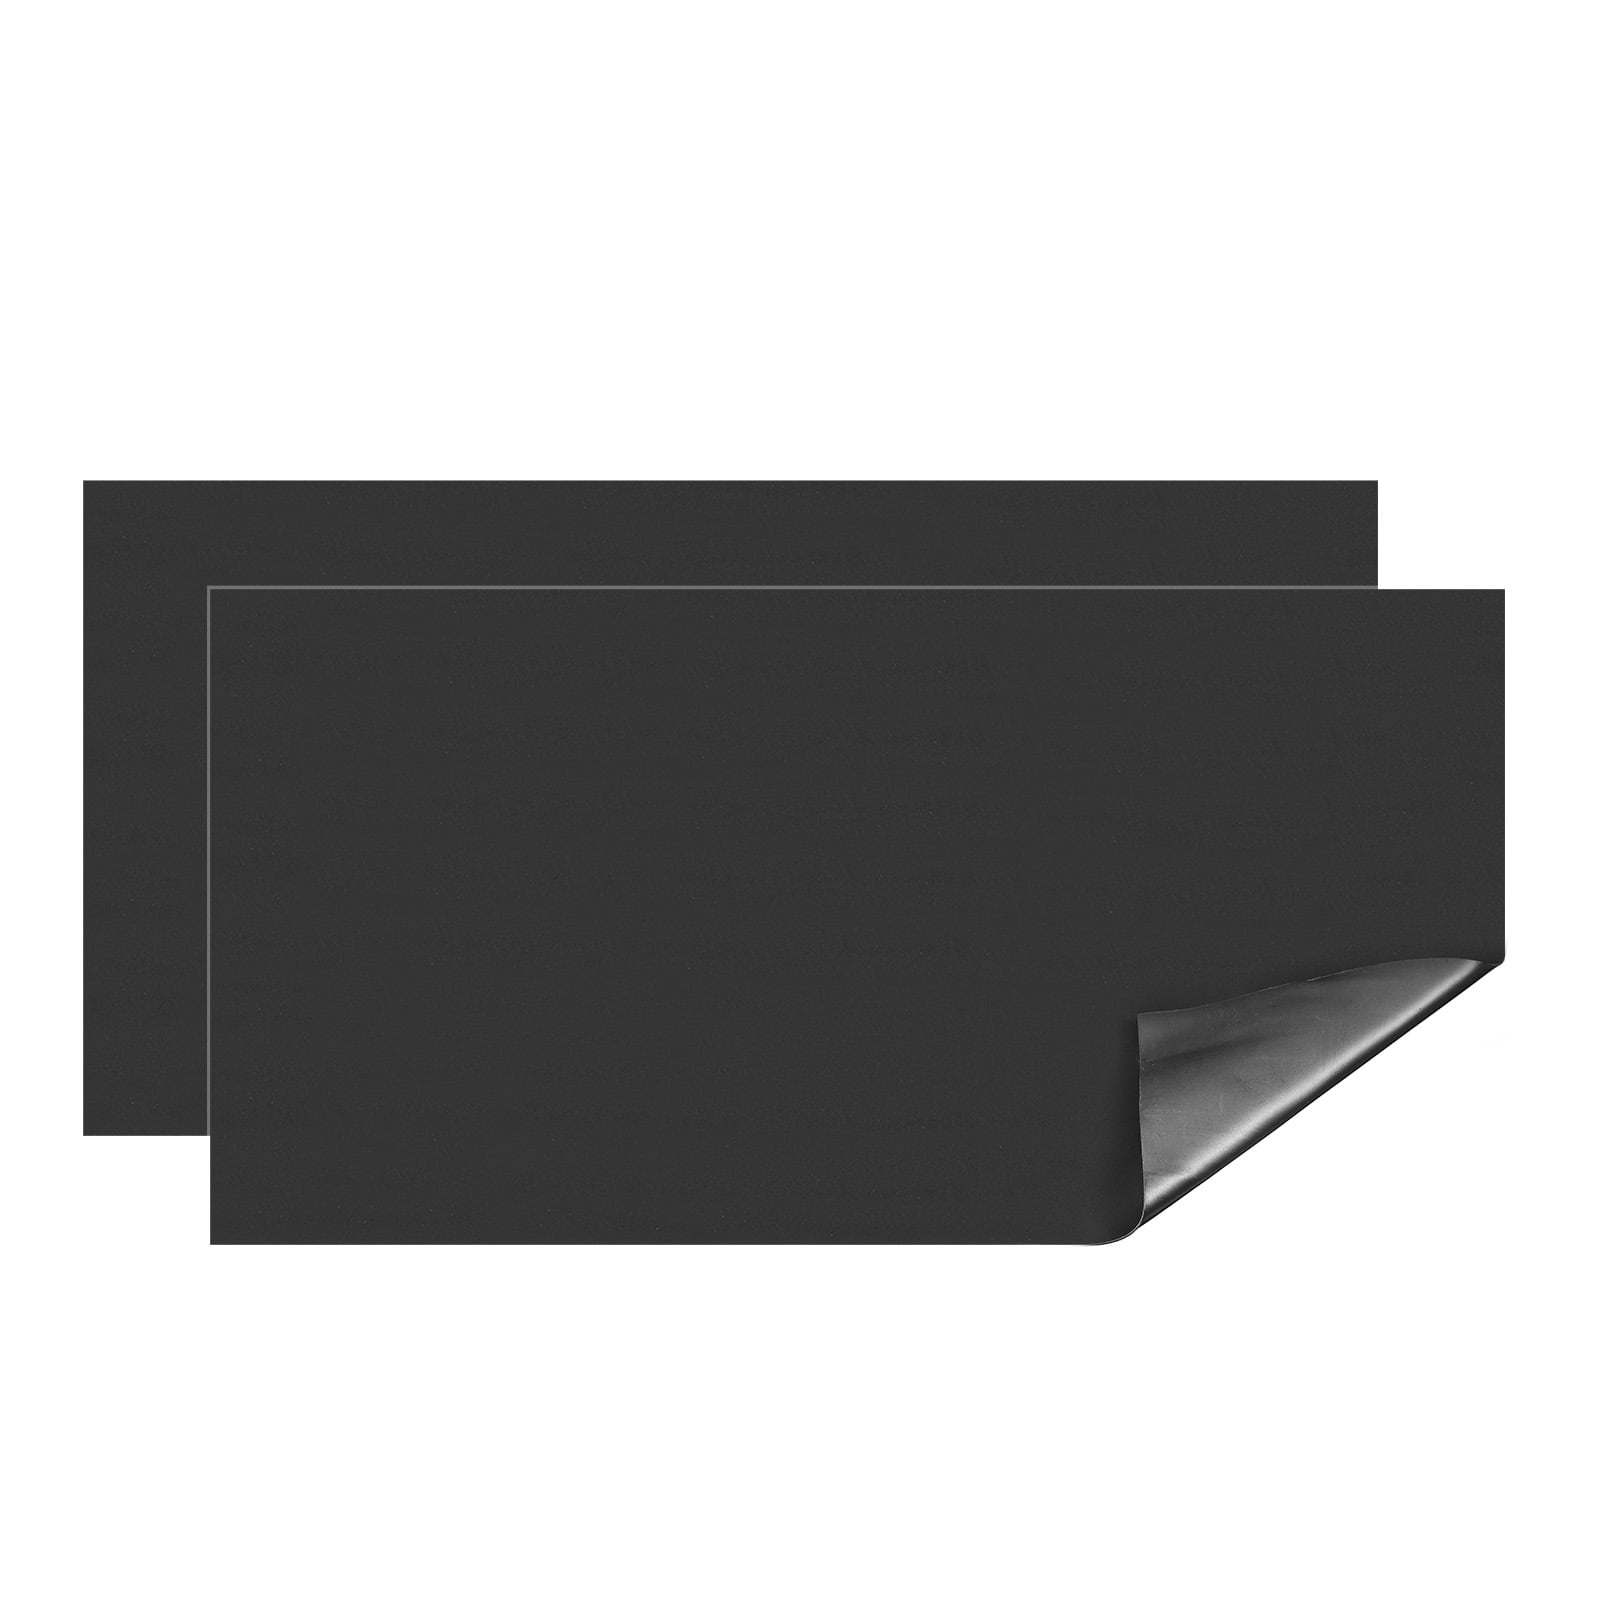 Magnetic Black Dry Erase Board (16″ x 12″) for Fridge or File